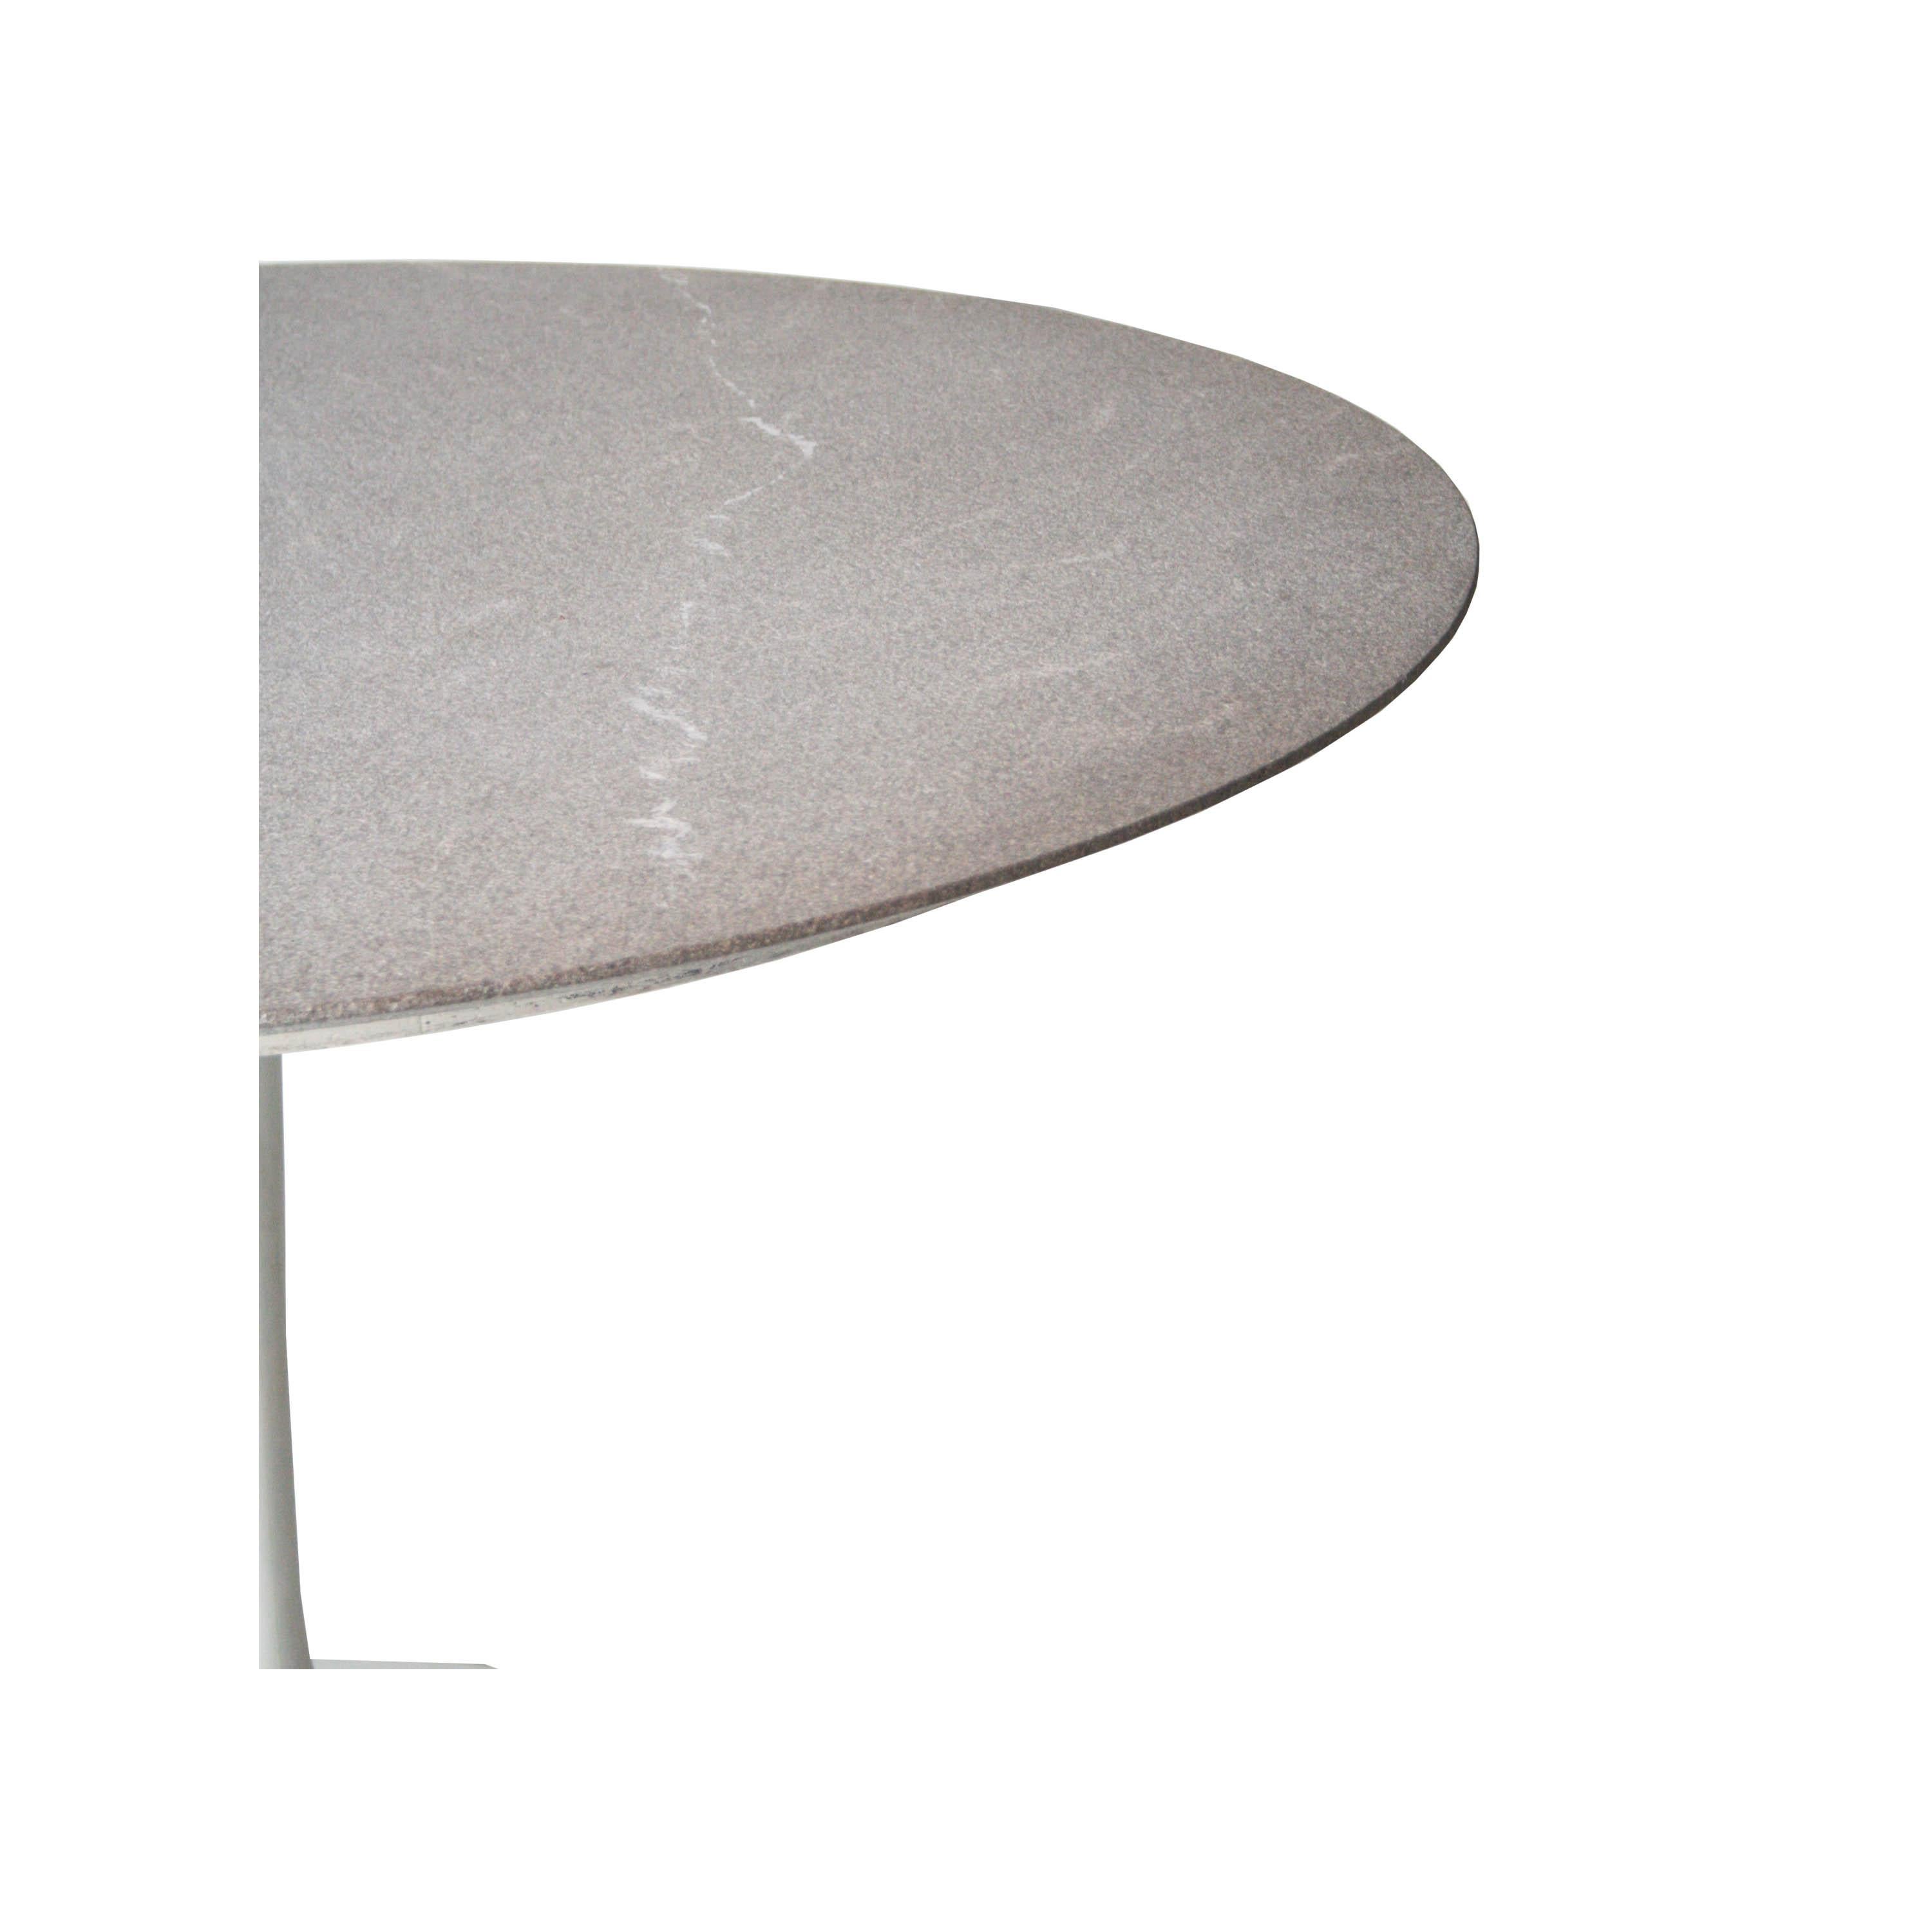 Dining table with granite circular top and circular white base 